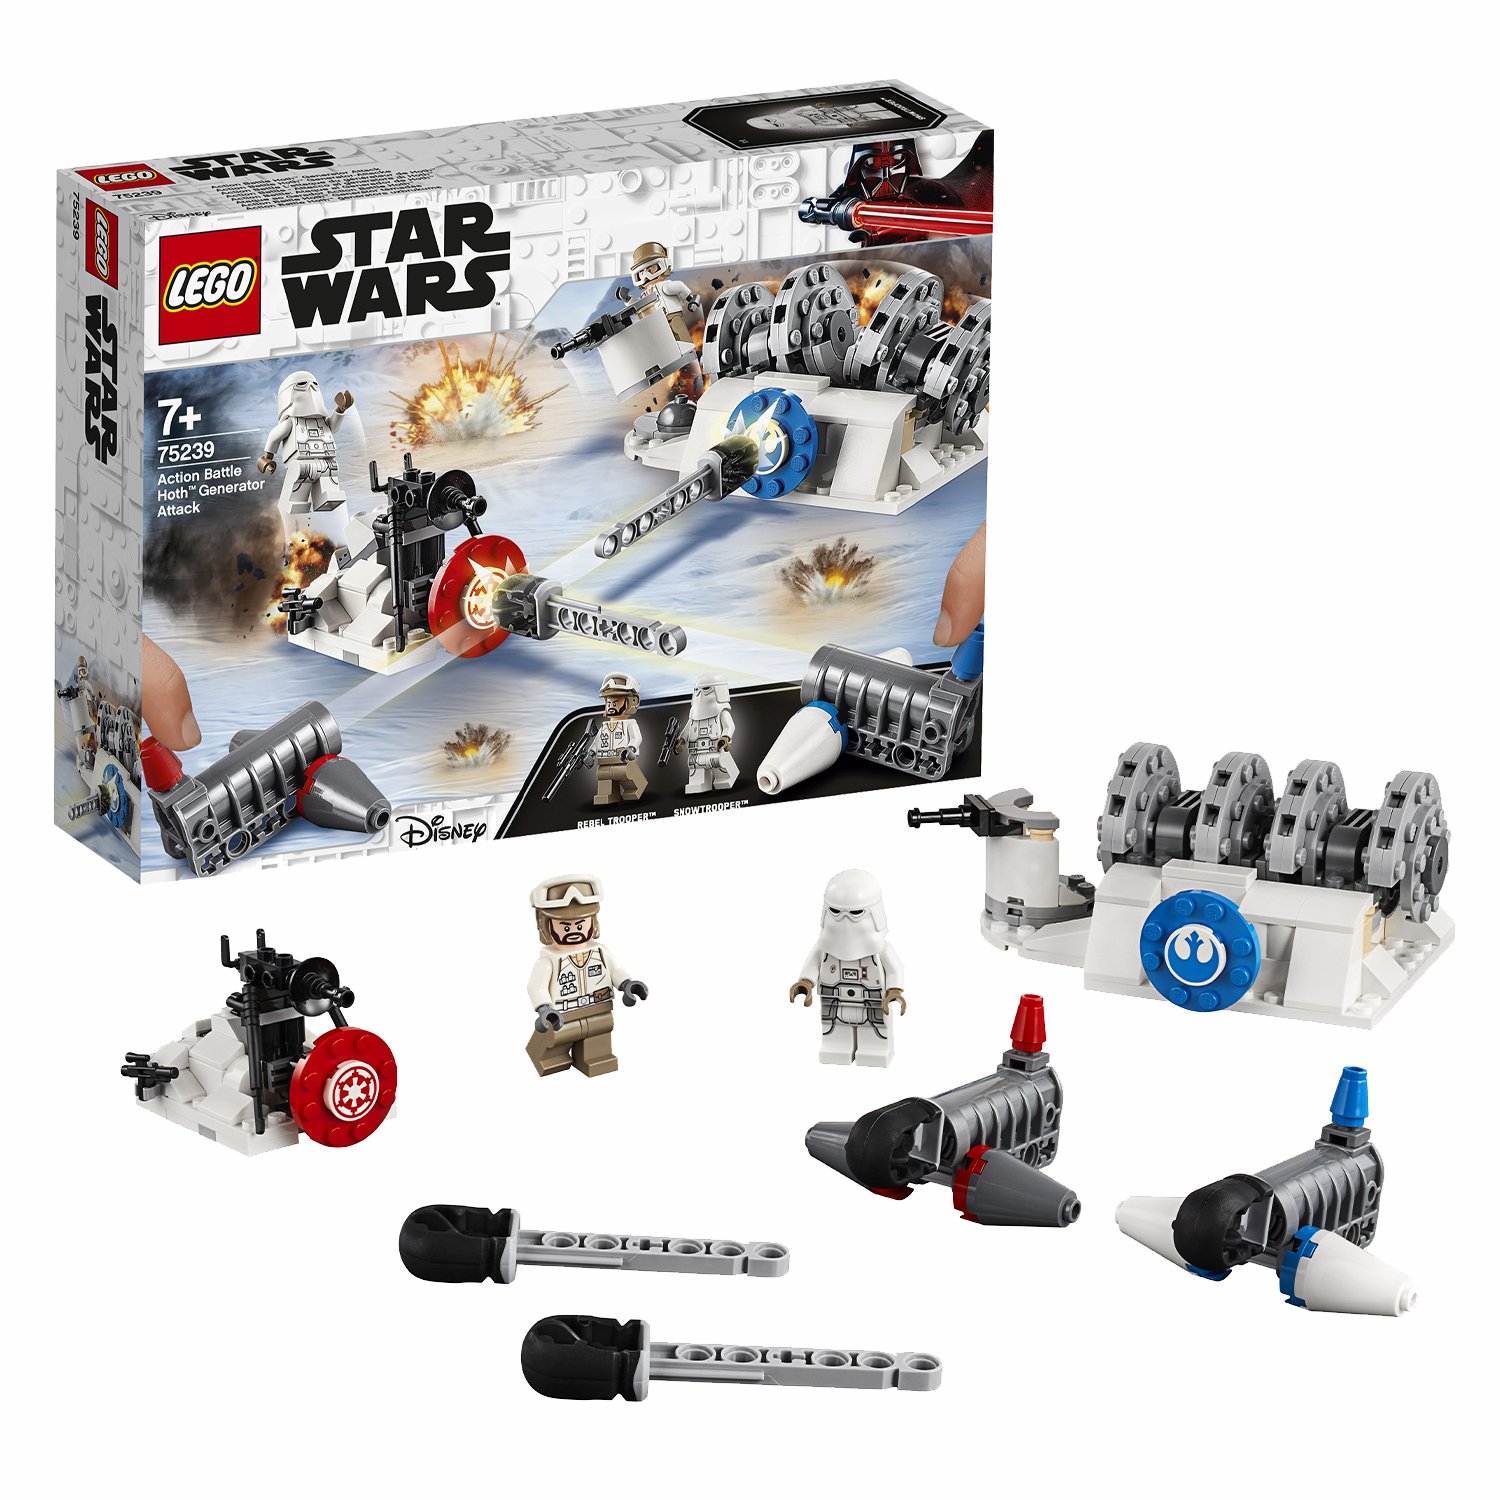 LEGO Star Wars Battle Hoth Generator Attack Toy - 75239